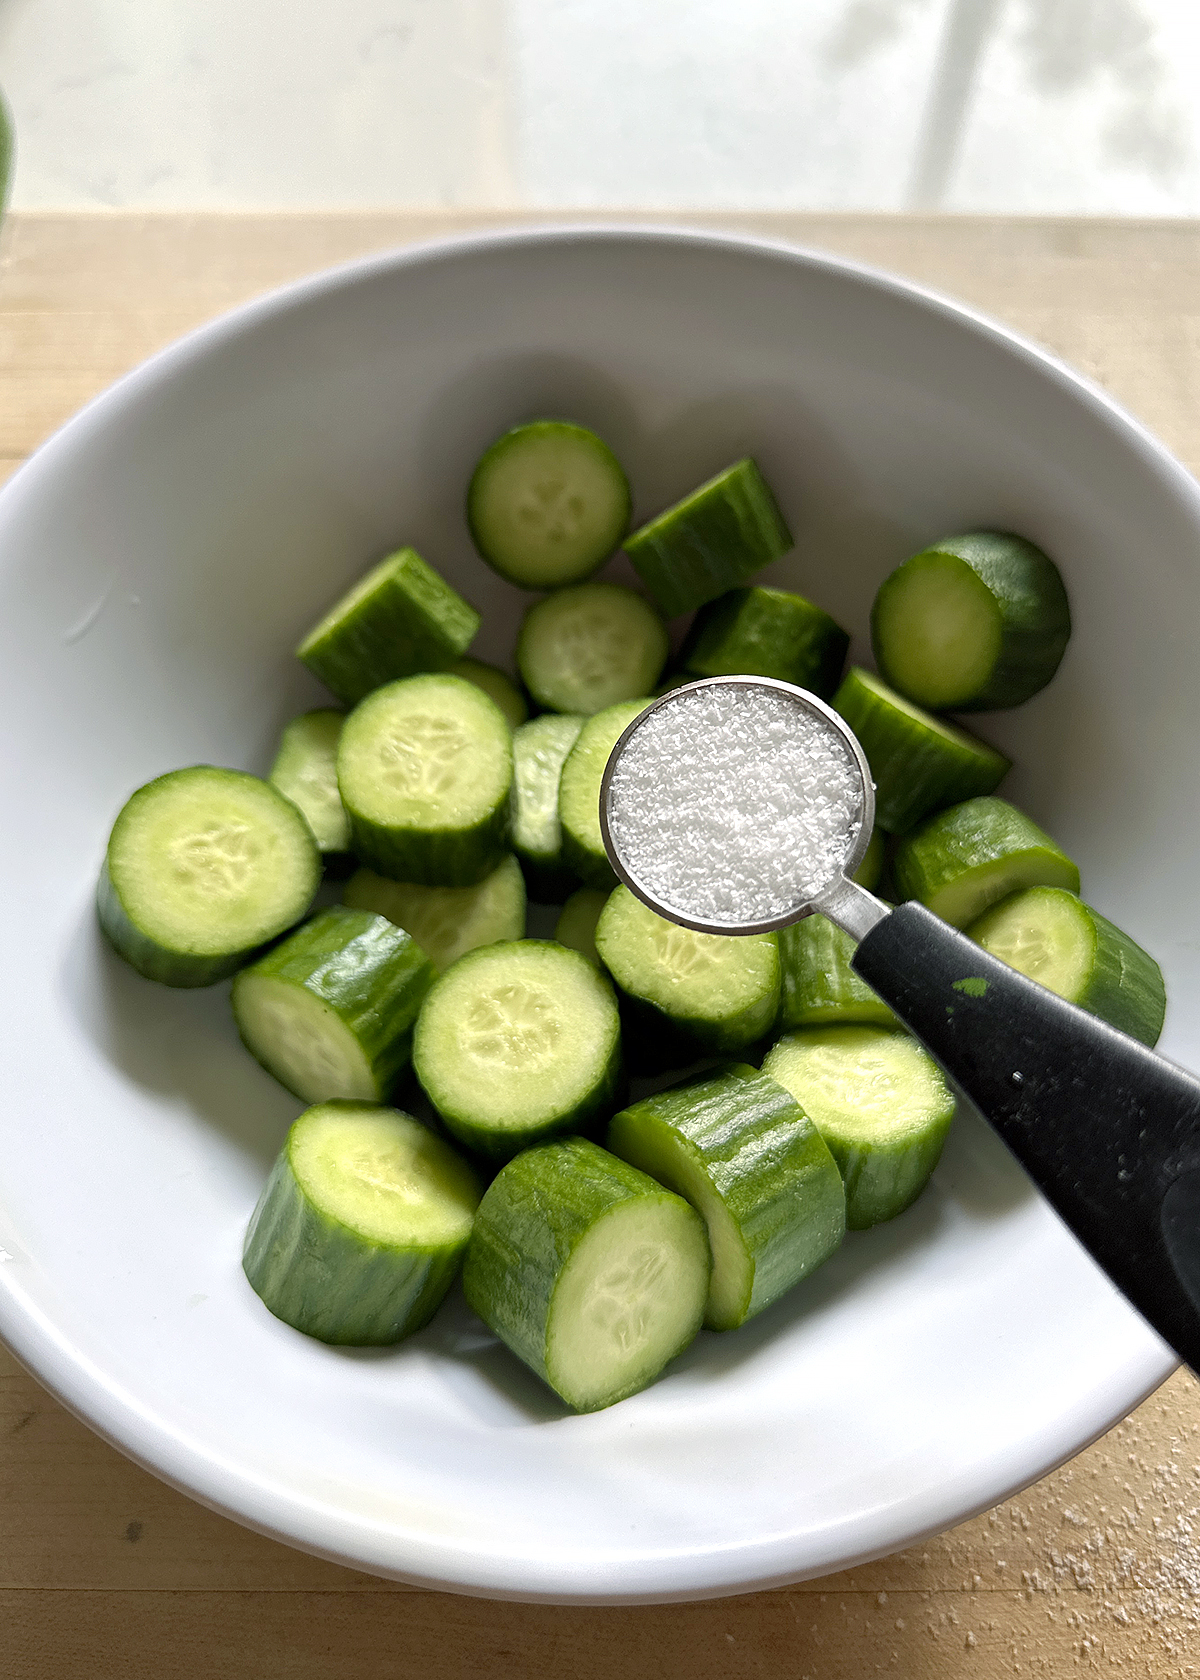 salt over sliced cucumbers in bowl